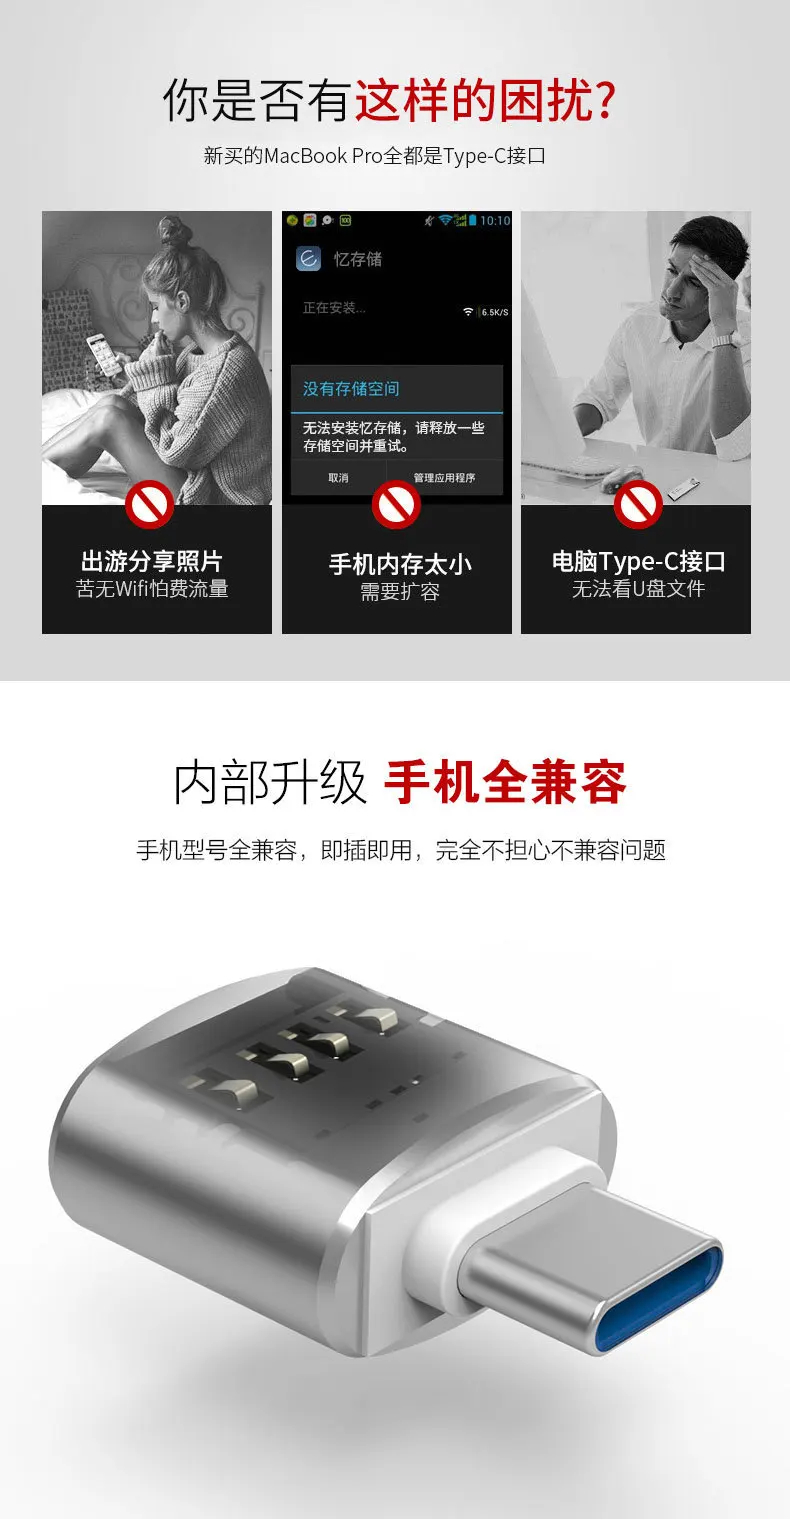 Адаптер type-C USB-C type-C к USB 2,0 3,0 конвертер телефона OTG кабель для samsung S8 S9 Note 8 huawei mate 9 P20 Xiaomi Mix 2S